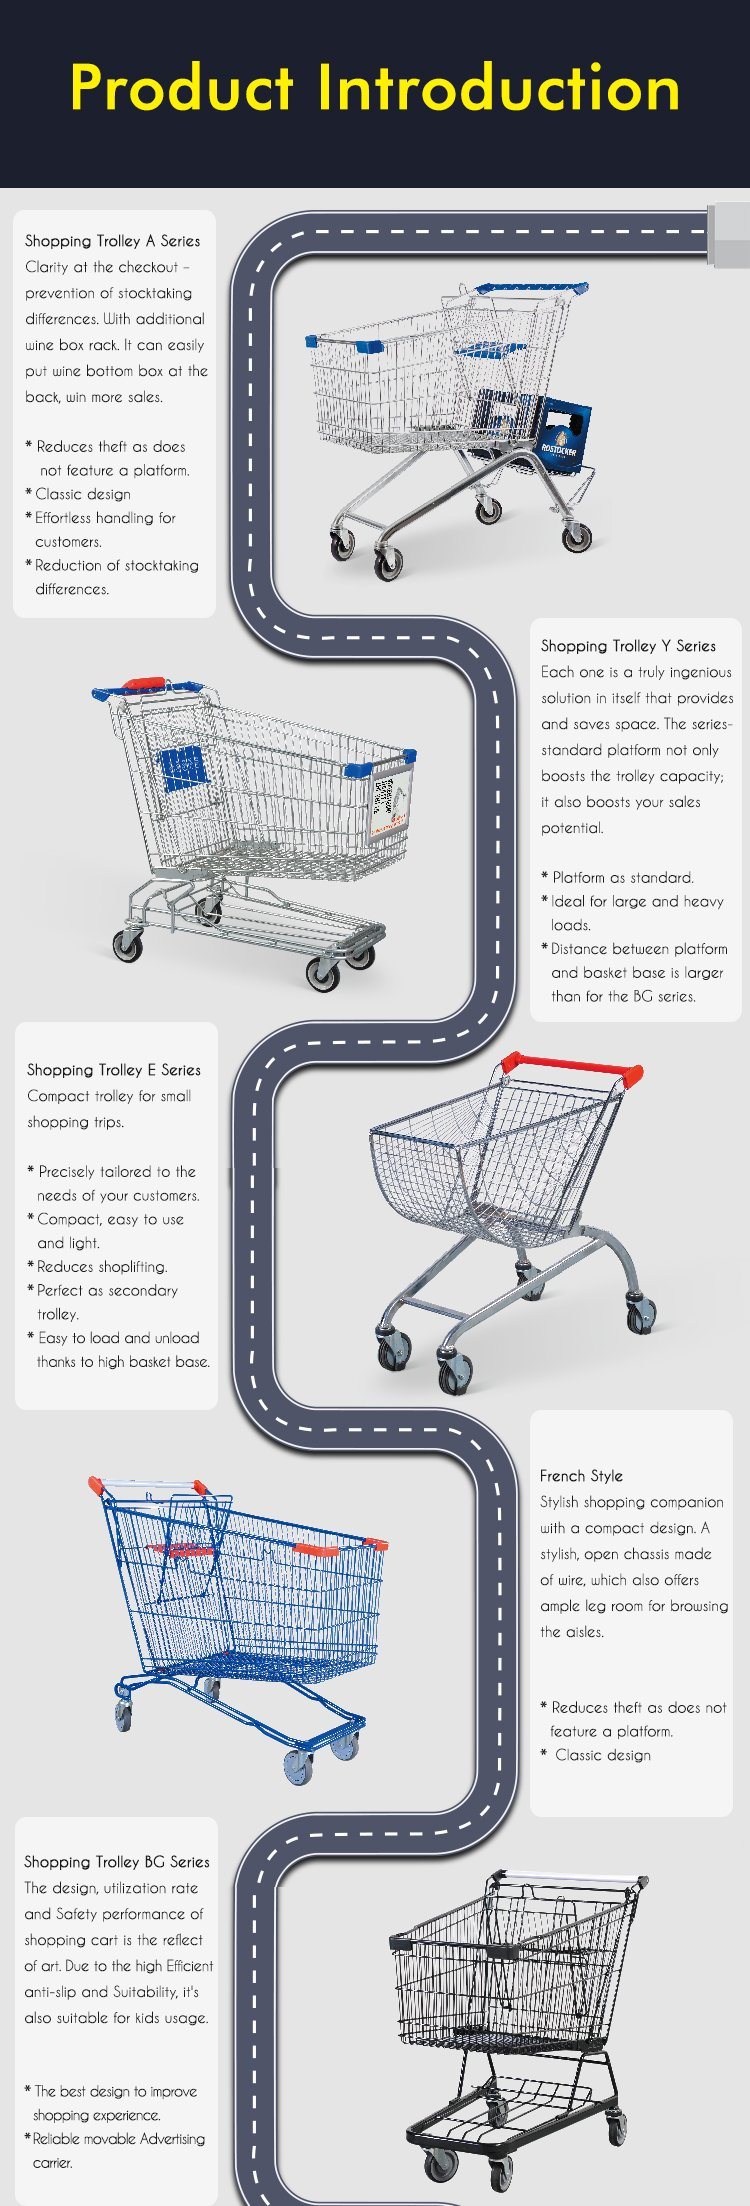 Retail Wal-Mart Style Mall Metal Shopping Cart Manufacturer